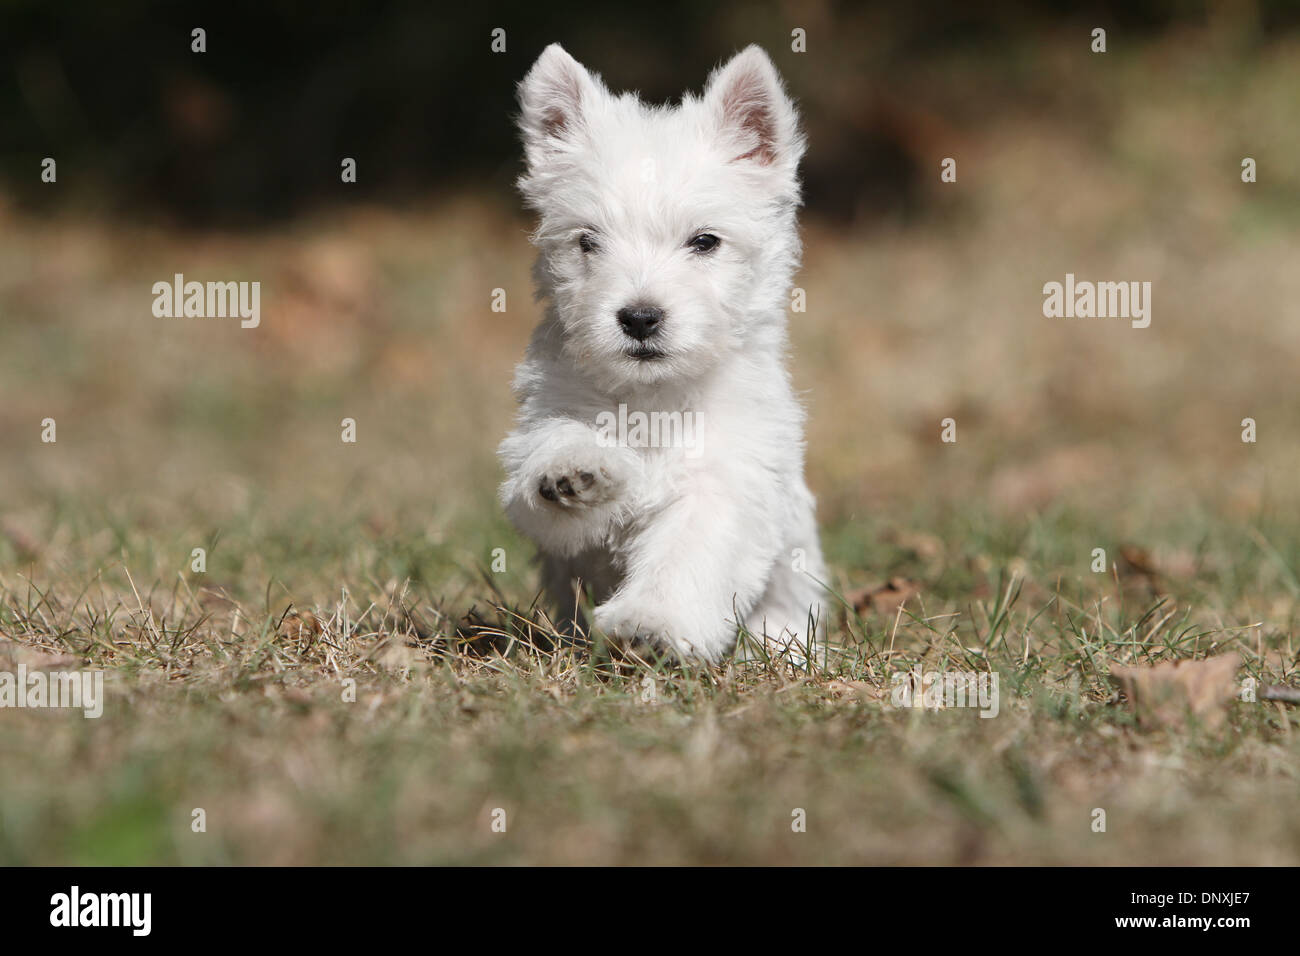 Dog West Highland White Terrier / Westie puppy running in a field Stock  Photo - Alamy